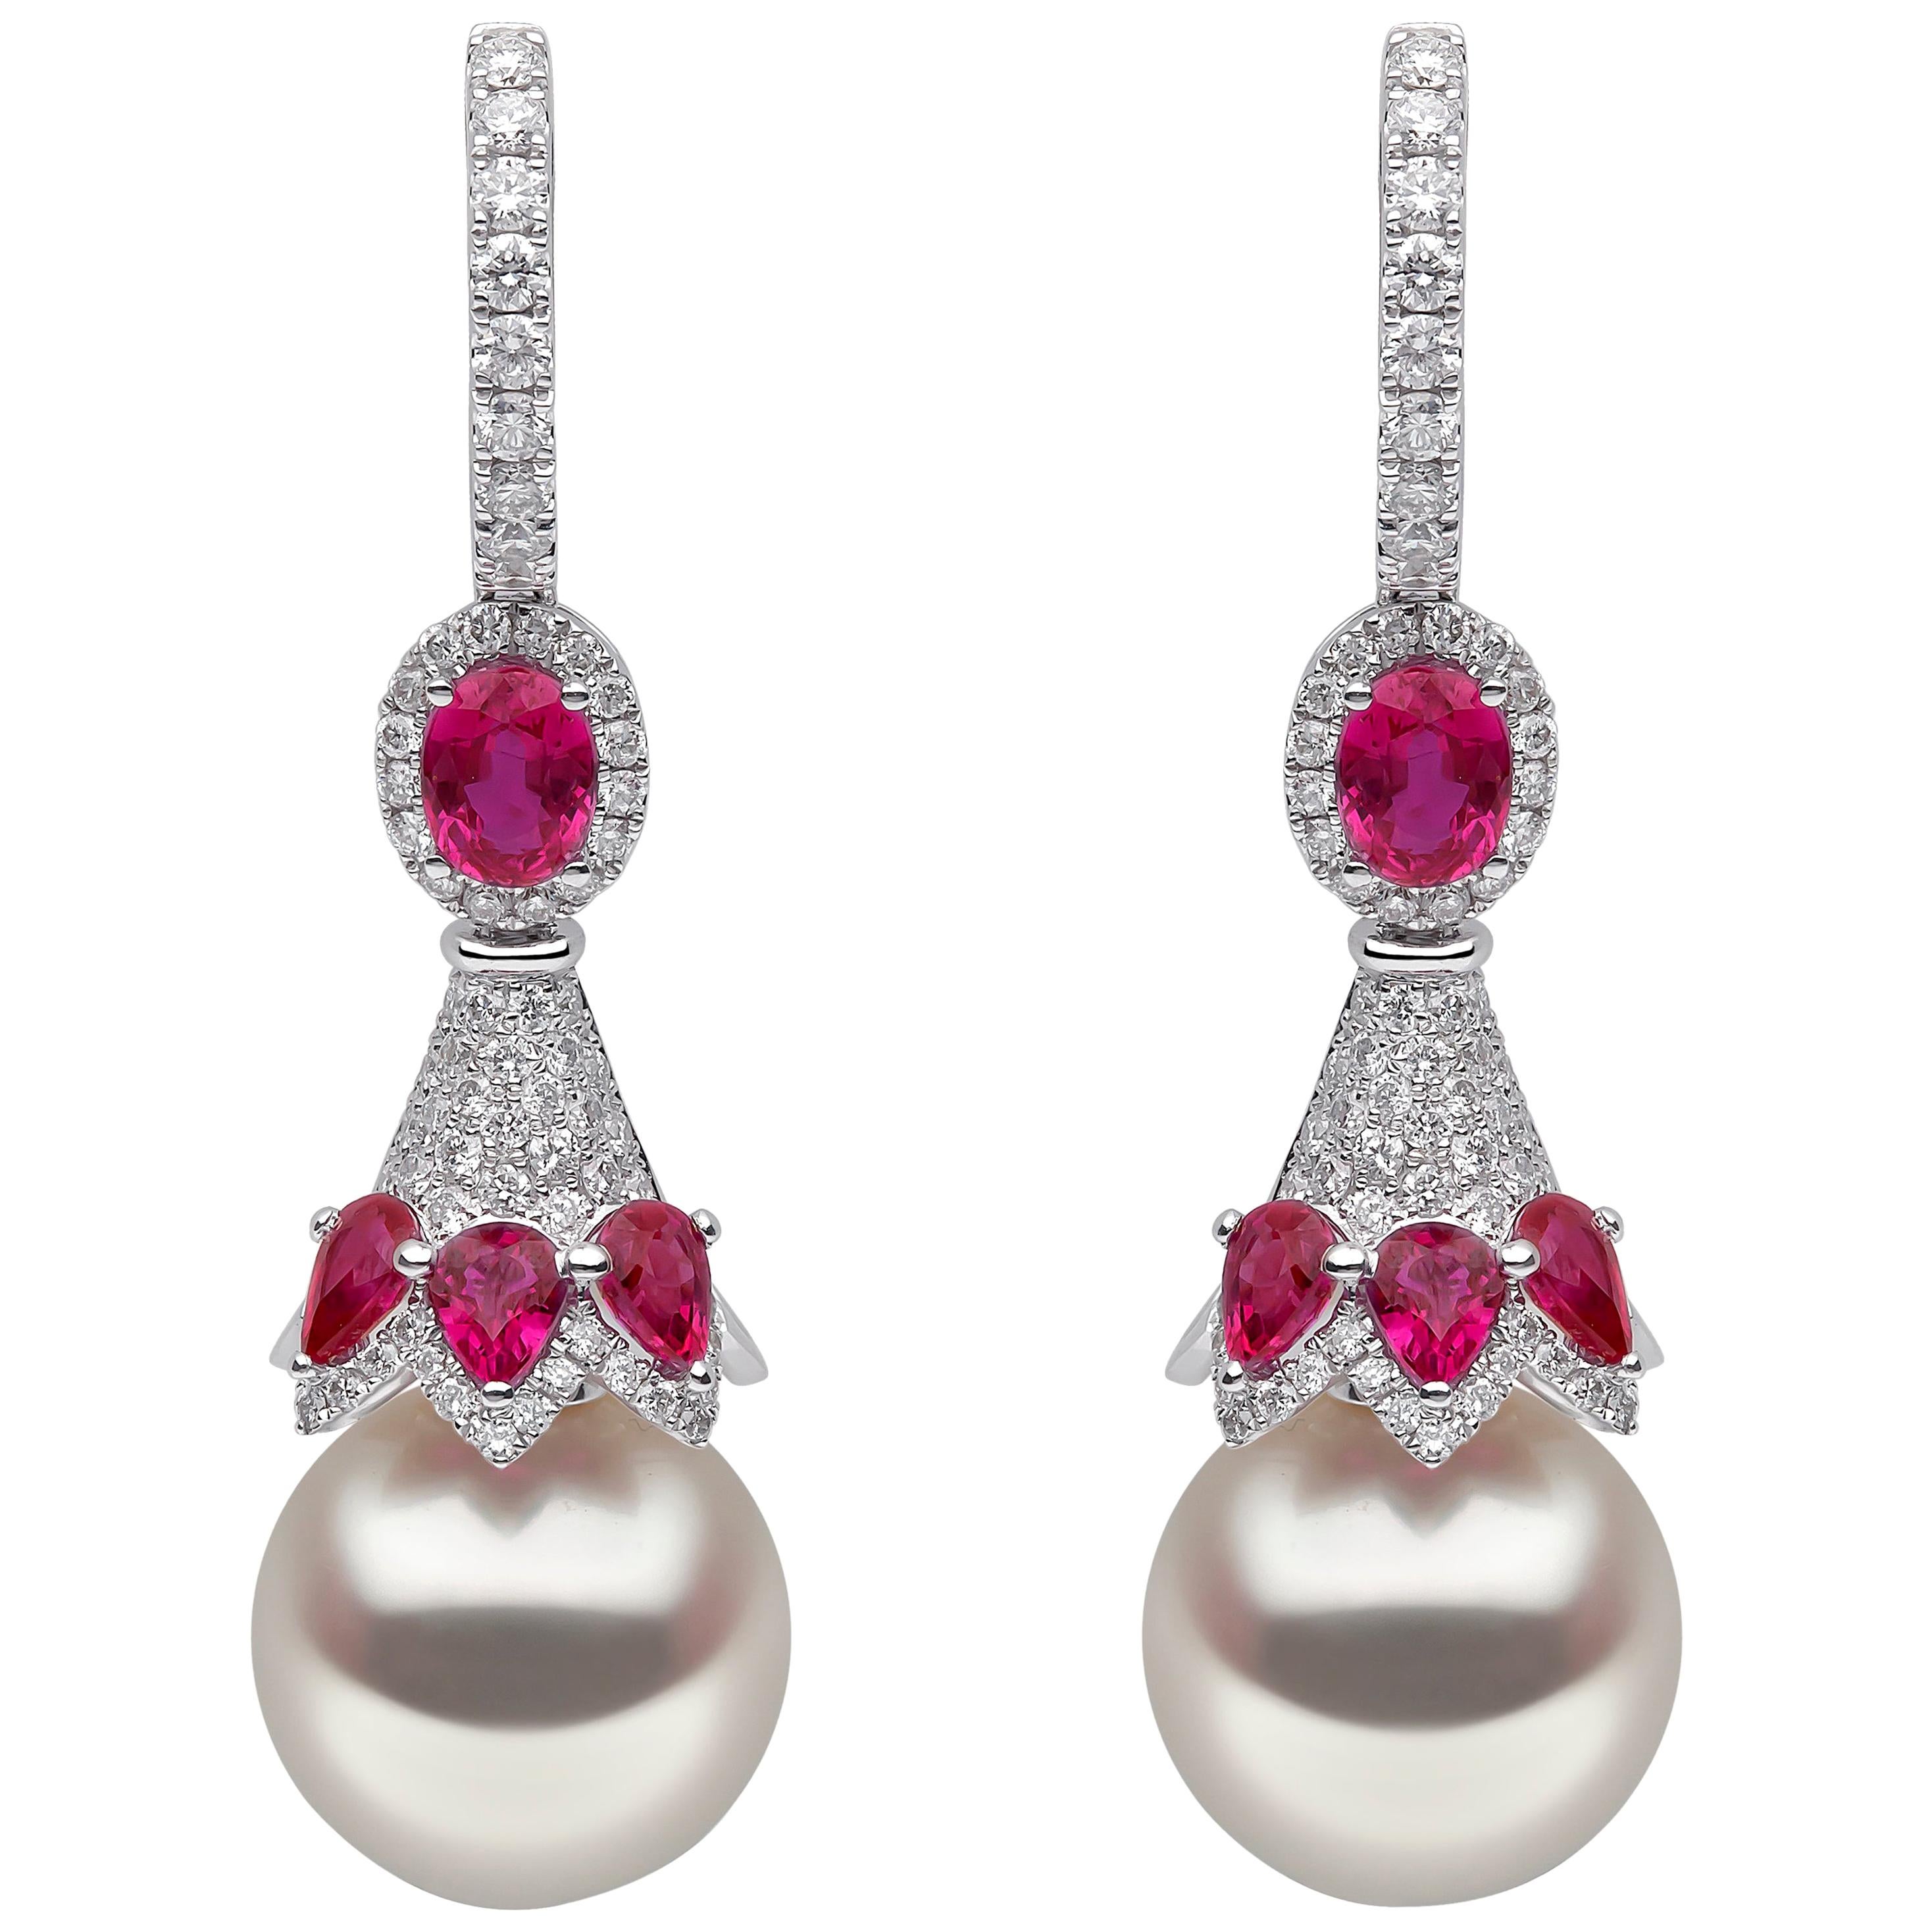 Yoko London South Sea Pearl, Diamond and Ruby Earrings in 18 Karat White Gold For Sale